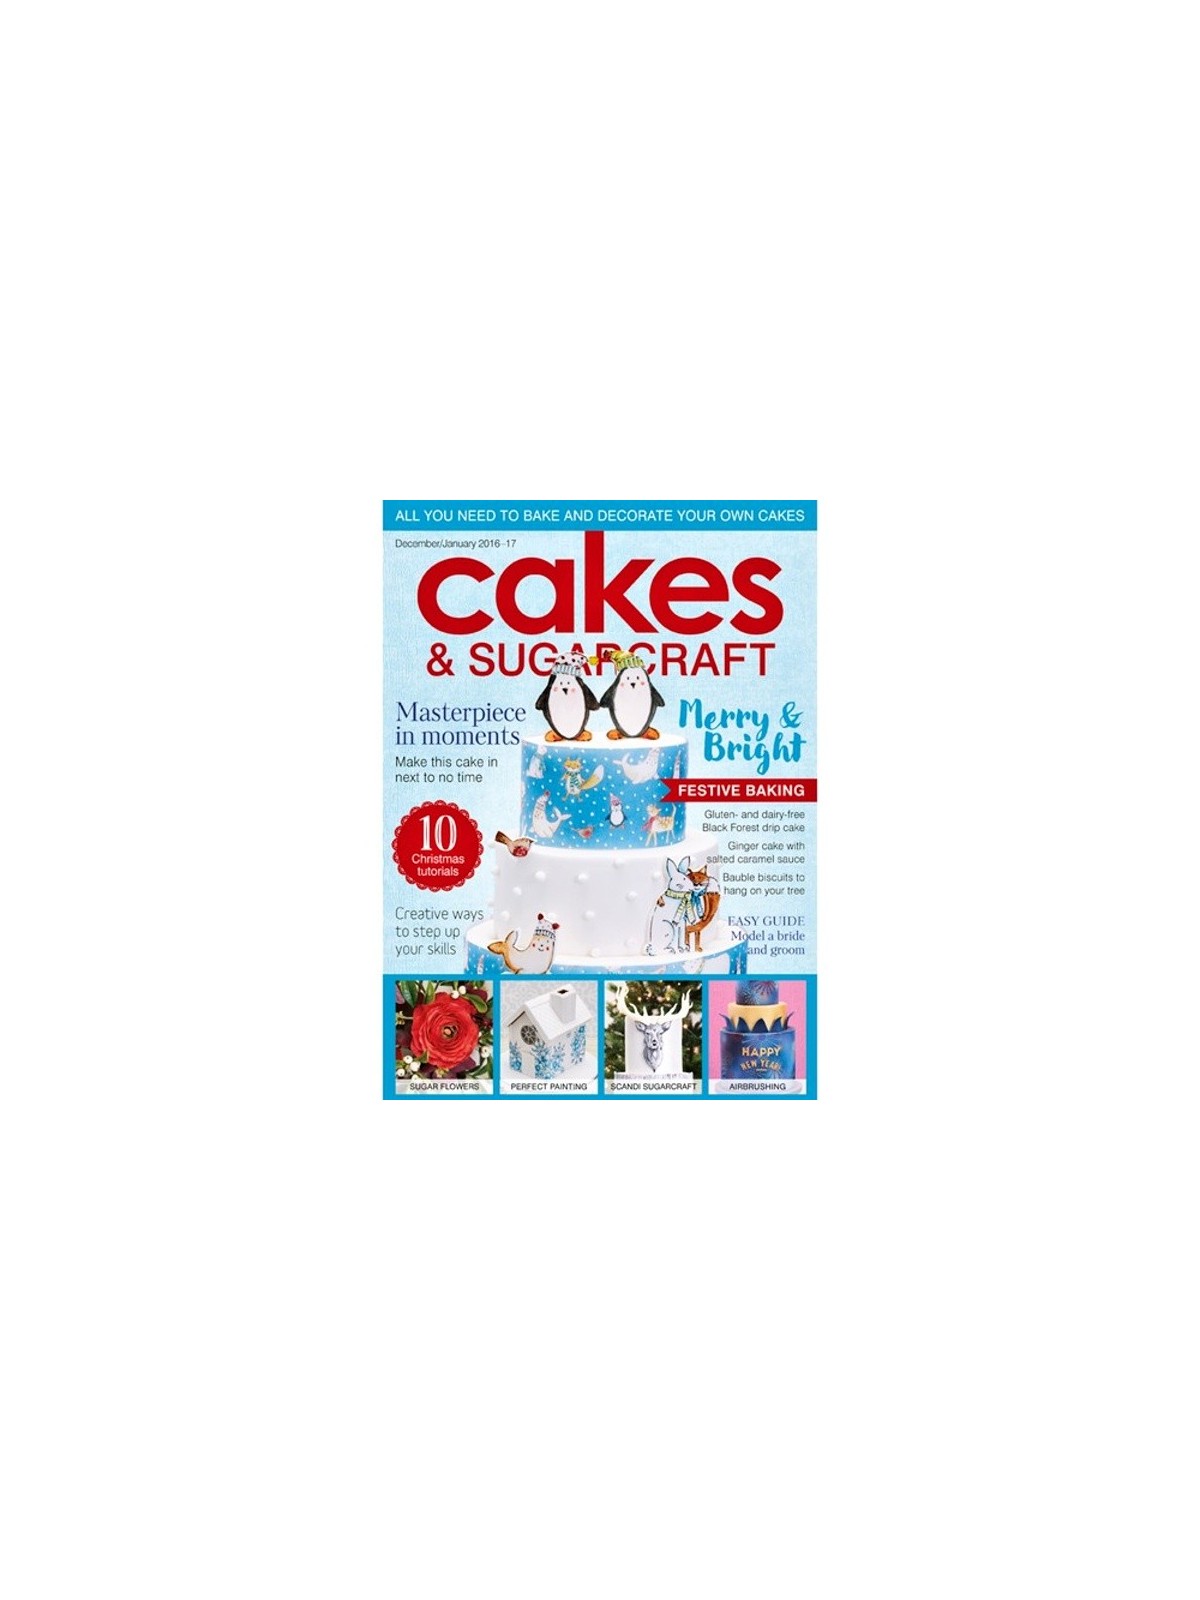 Cakes & Sugarcraft - december / január 16/17